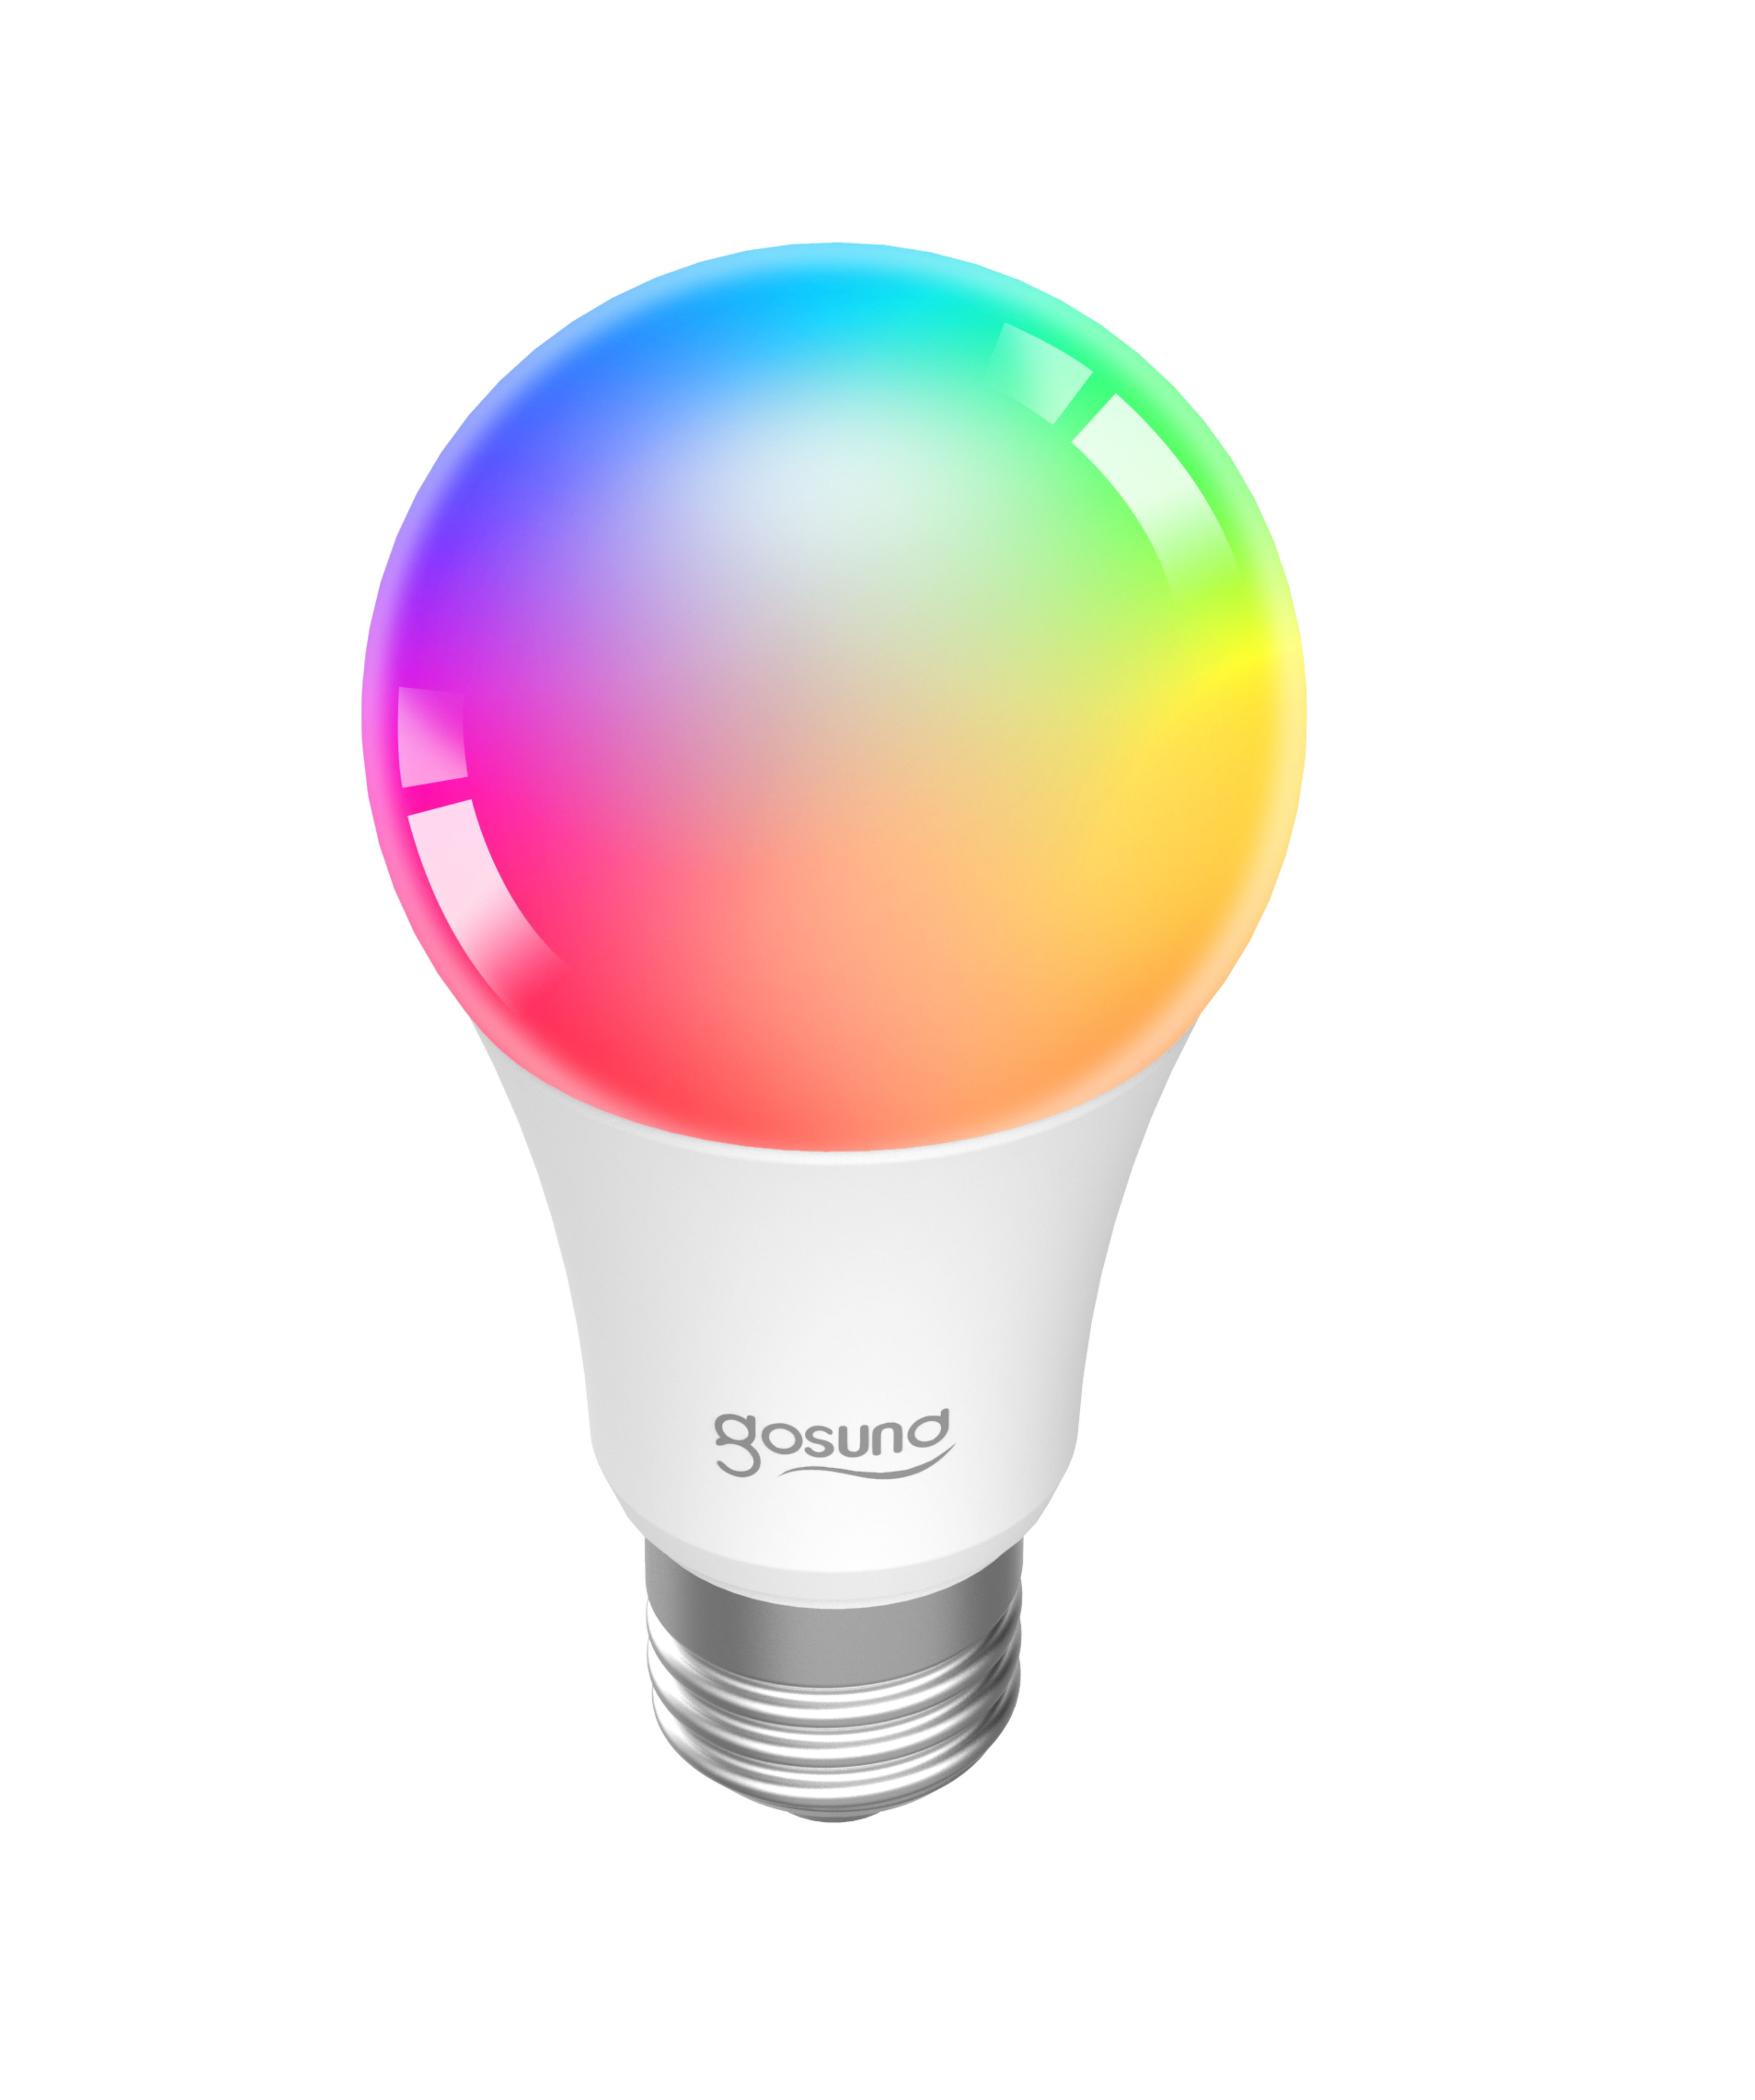 LED GOSUND Glühbirne NiteBird WB4 Smarte Glühbirne Mehrfarbig